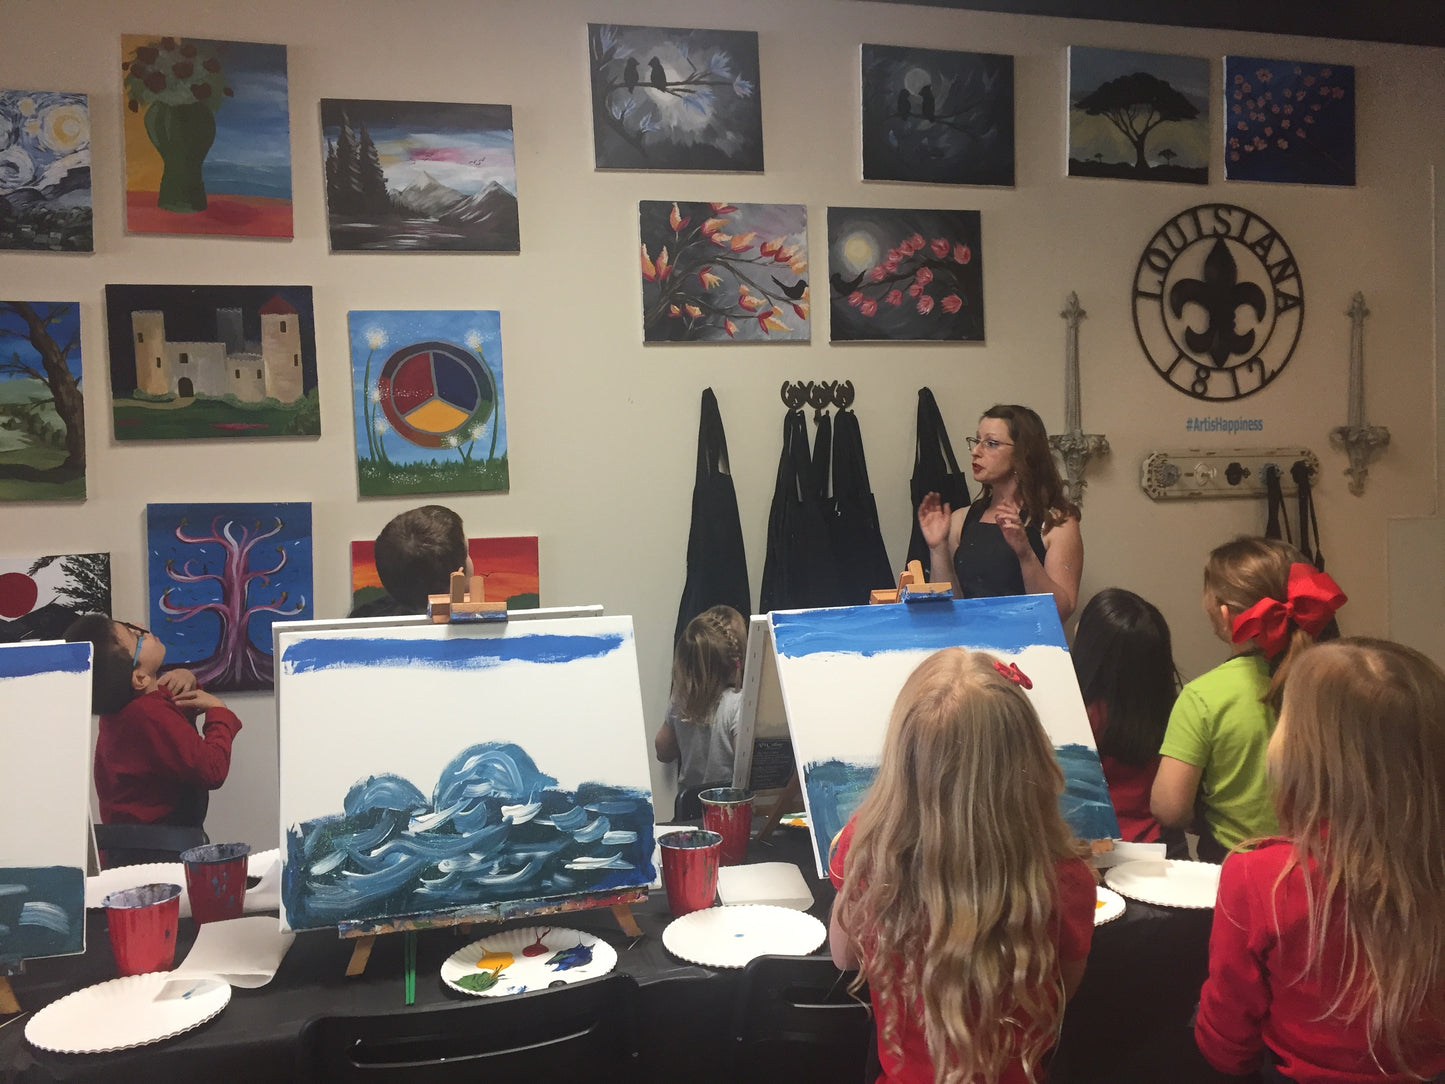 Wed, Mar 4, 4-6p “Beach at Sunrise” Houston Public Kids Painting Class